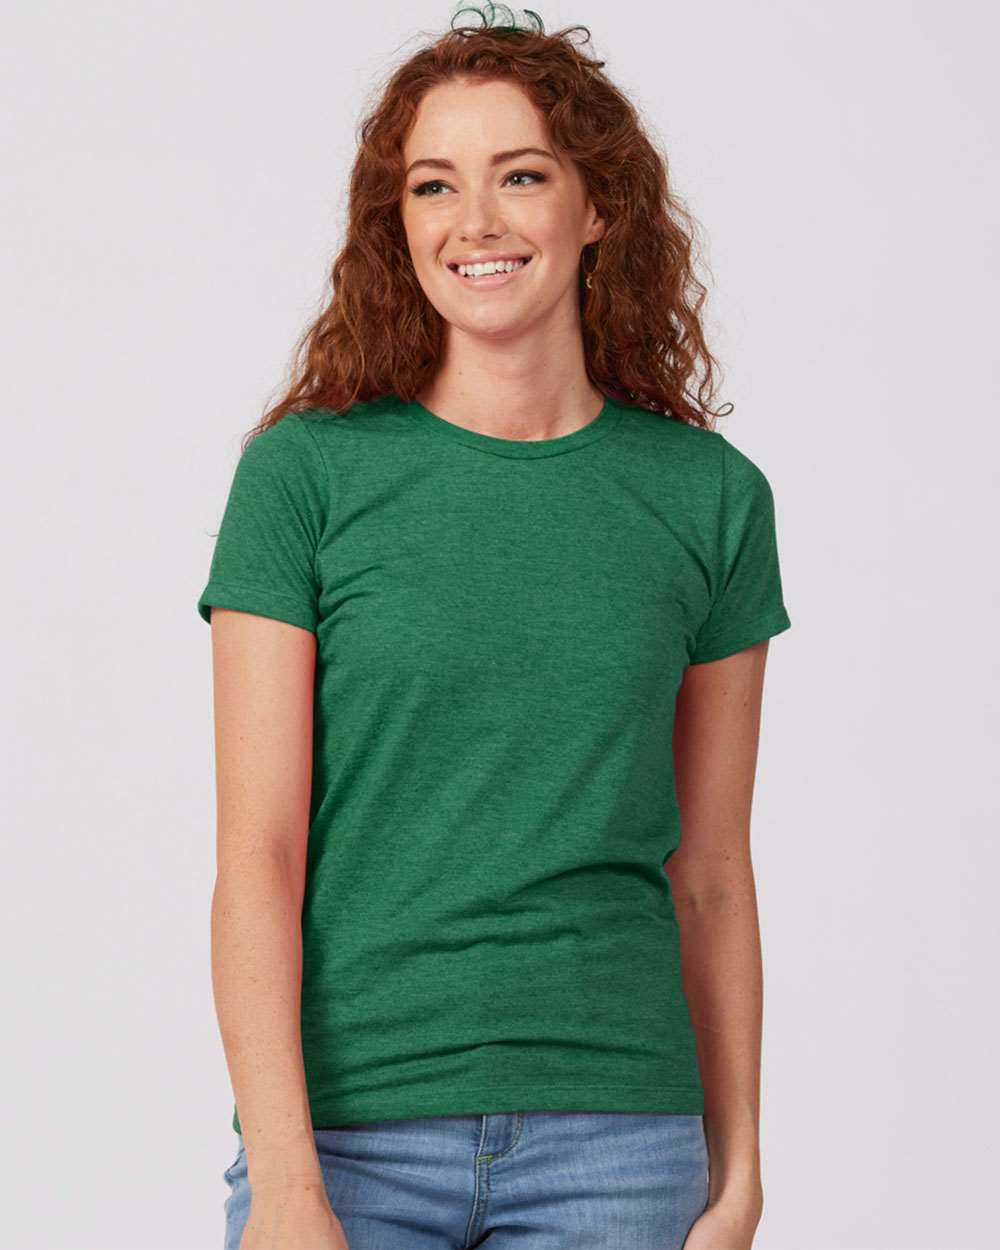 Tultex 542 Women's Premium Cotton Blend T-Shirt - Kelly Heather - HIT a Double